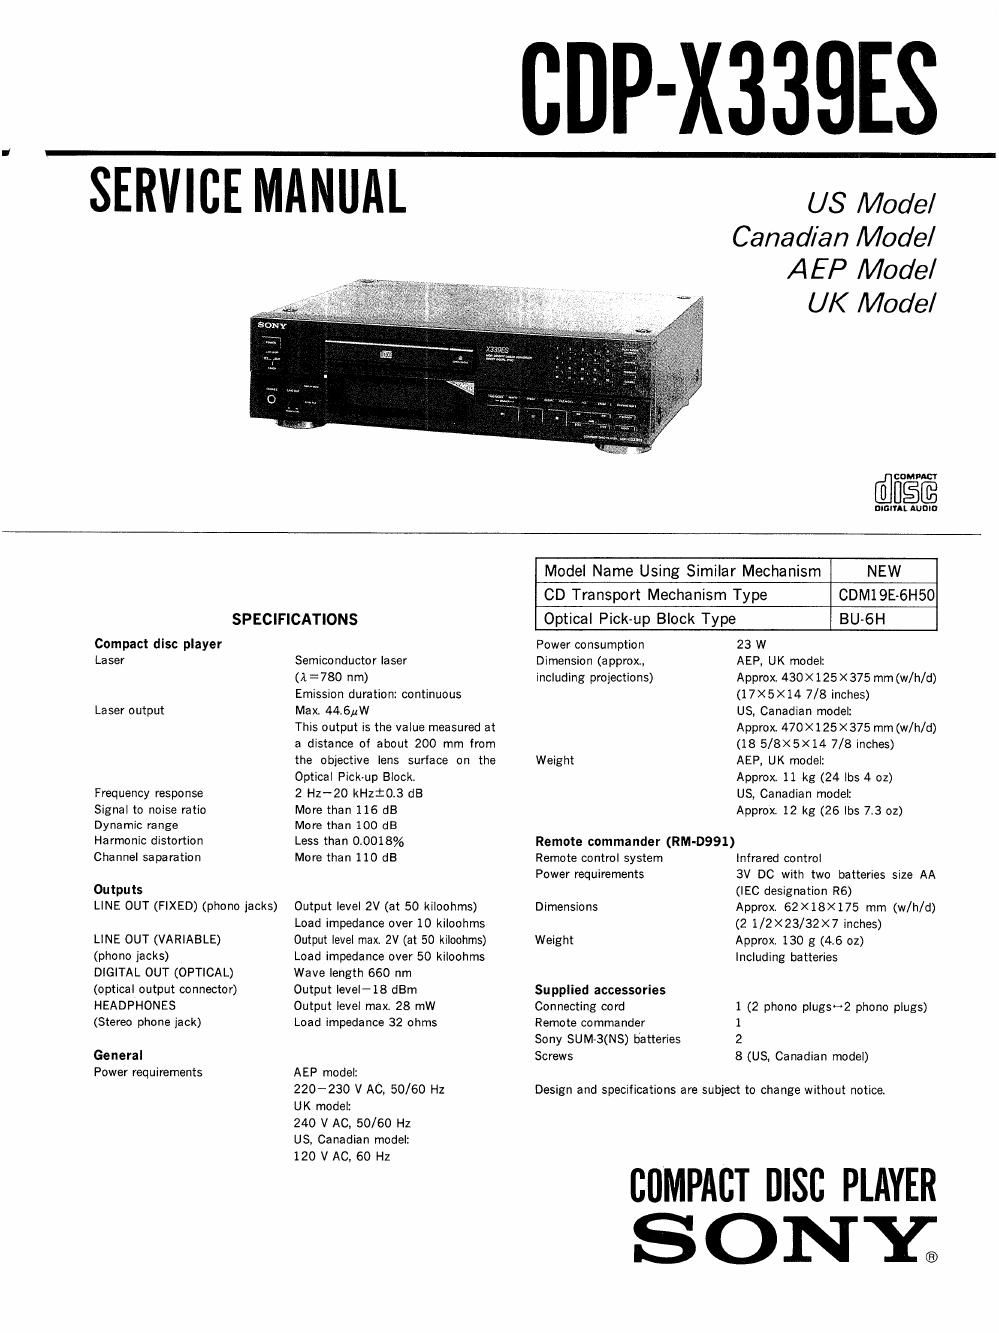 sony cdp x 339 es service manual